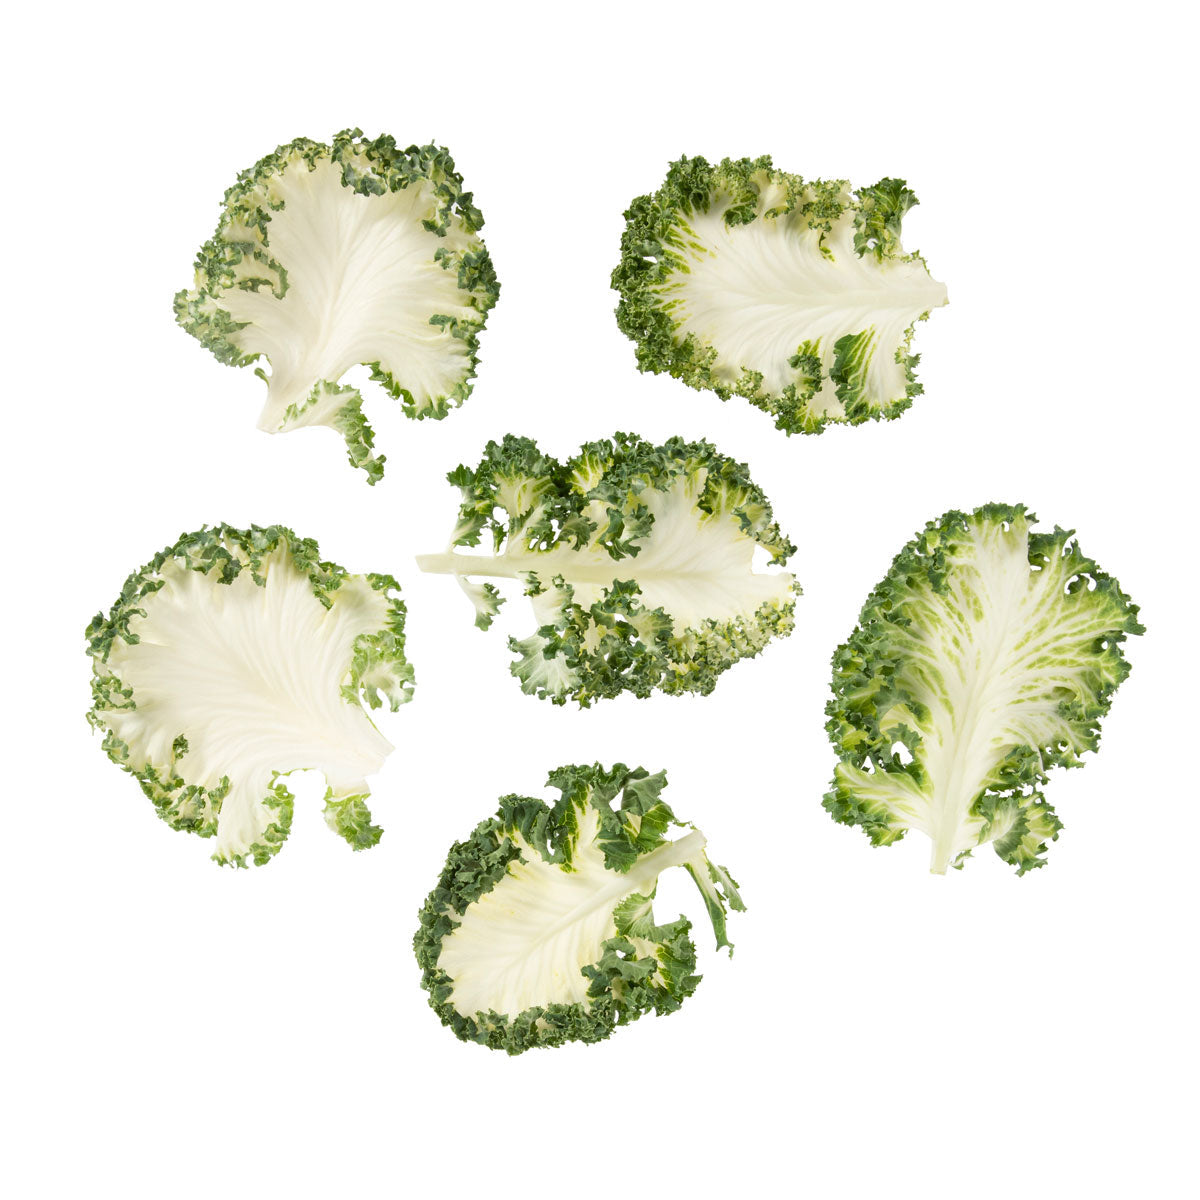 County Line Harvest Organic Casper Baby Kale